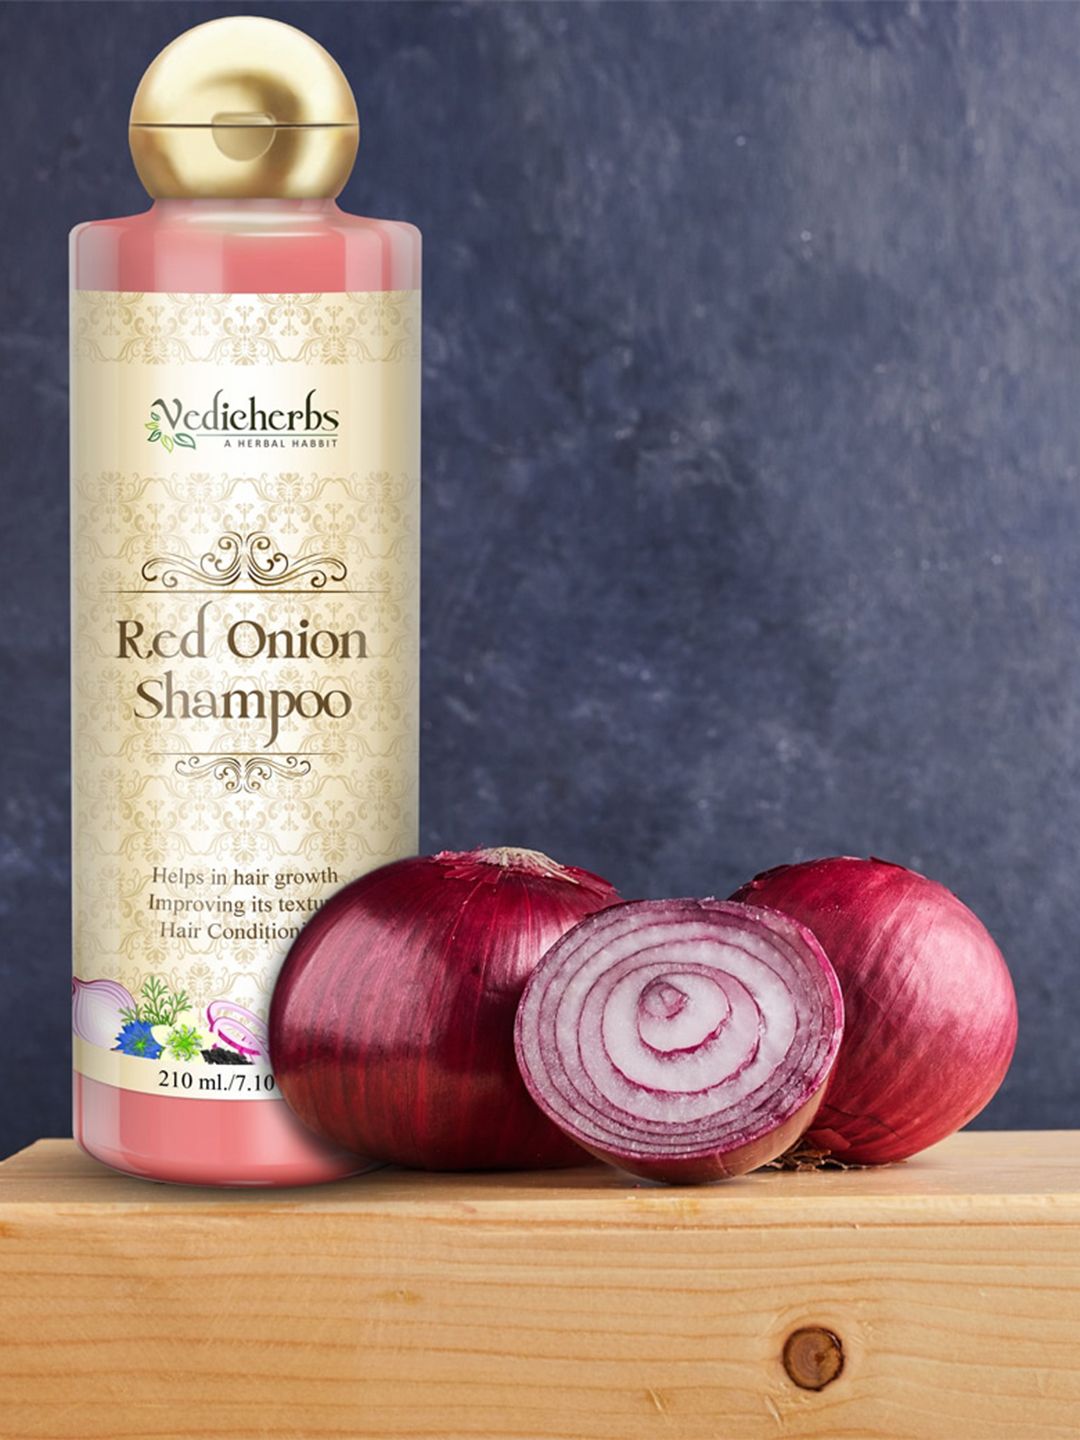 Vedicherbs Red Onion Shampoo 210ml Price in India